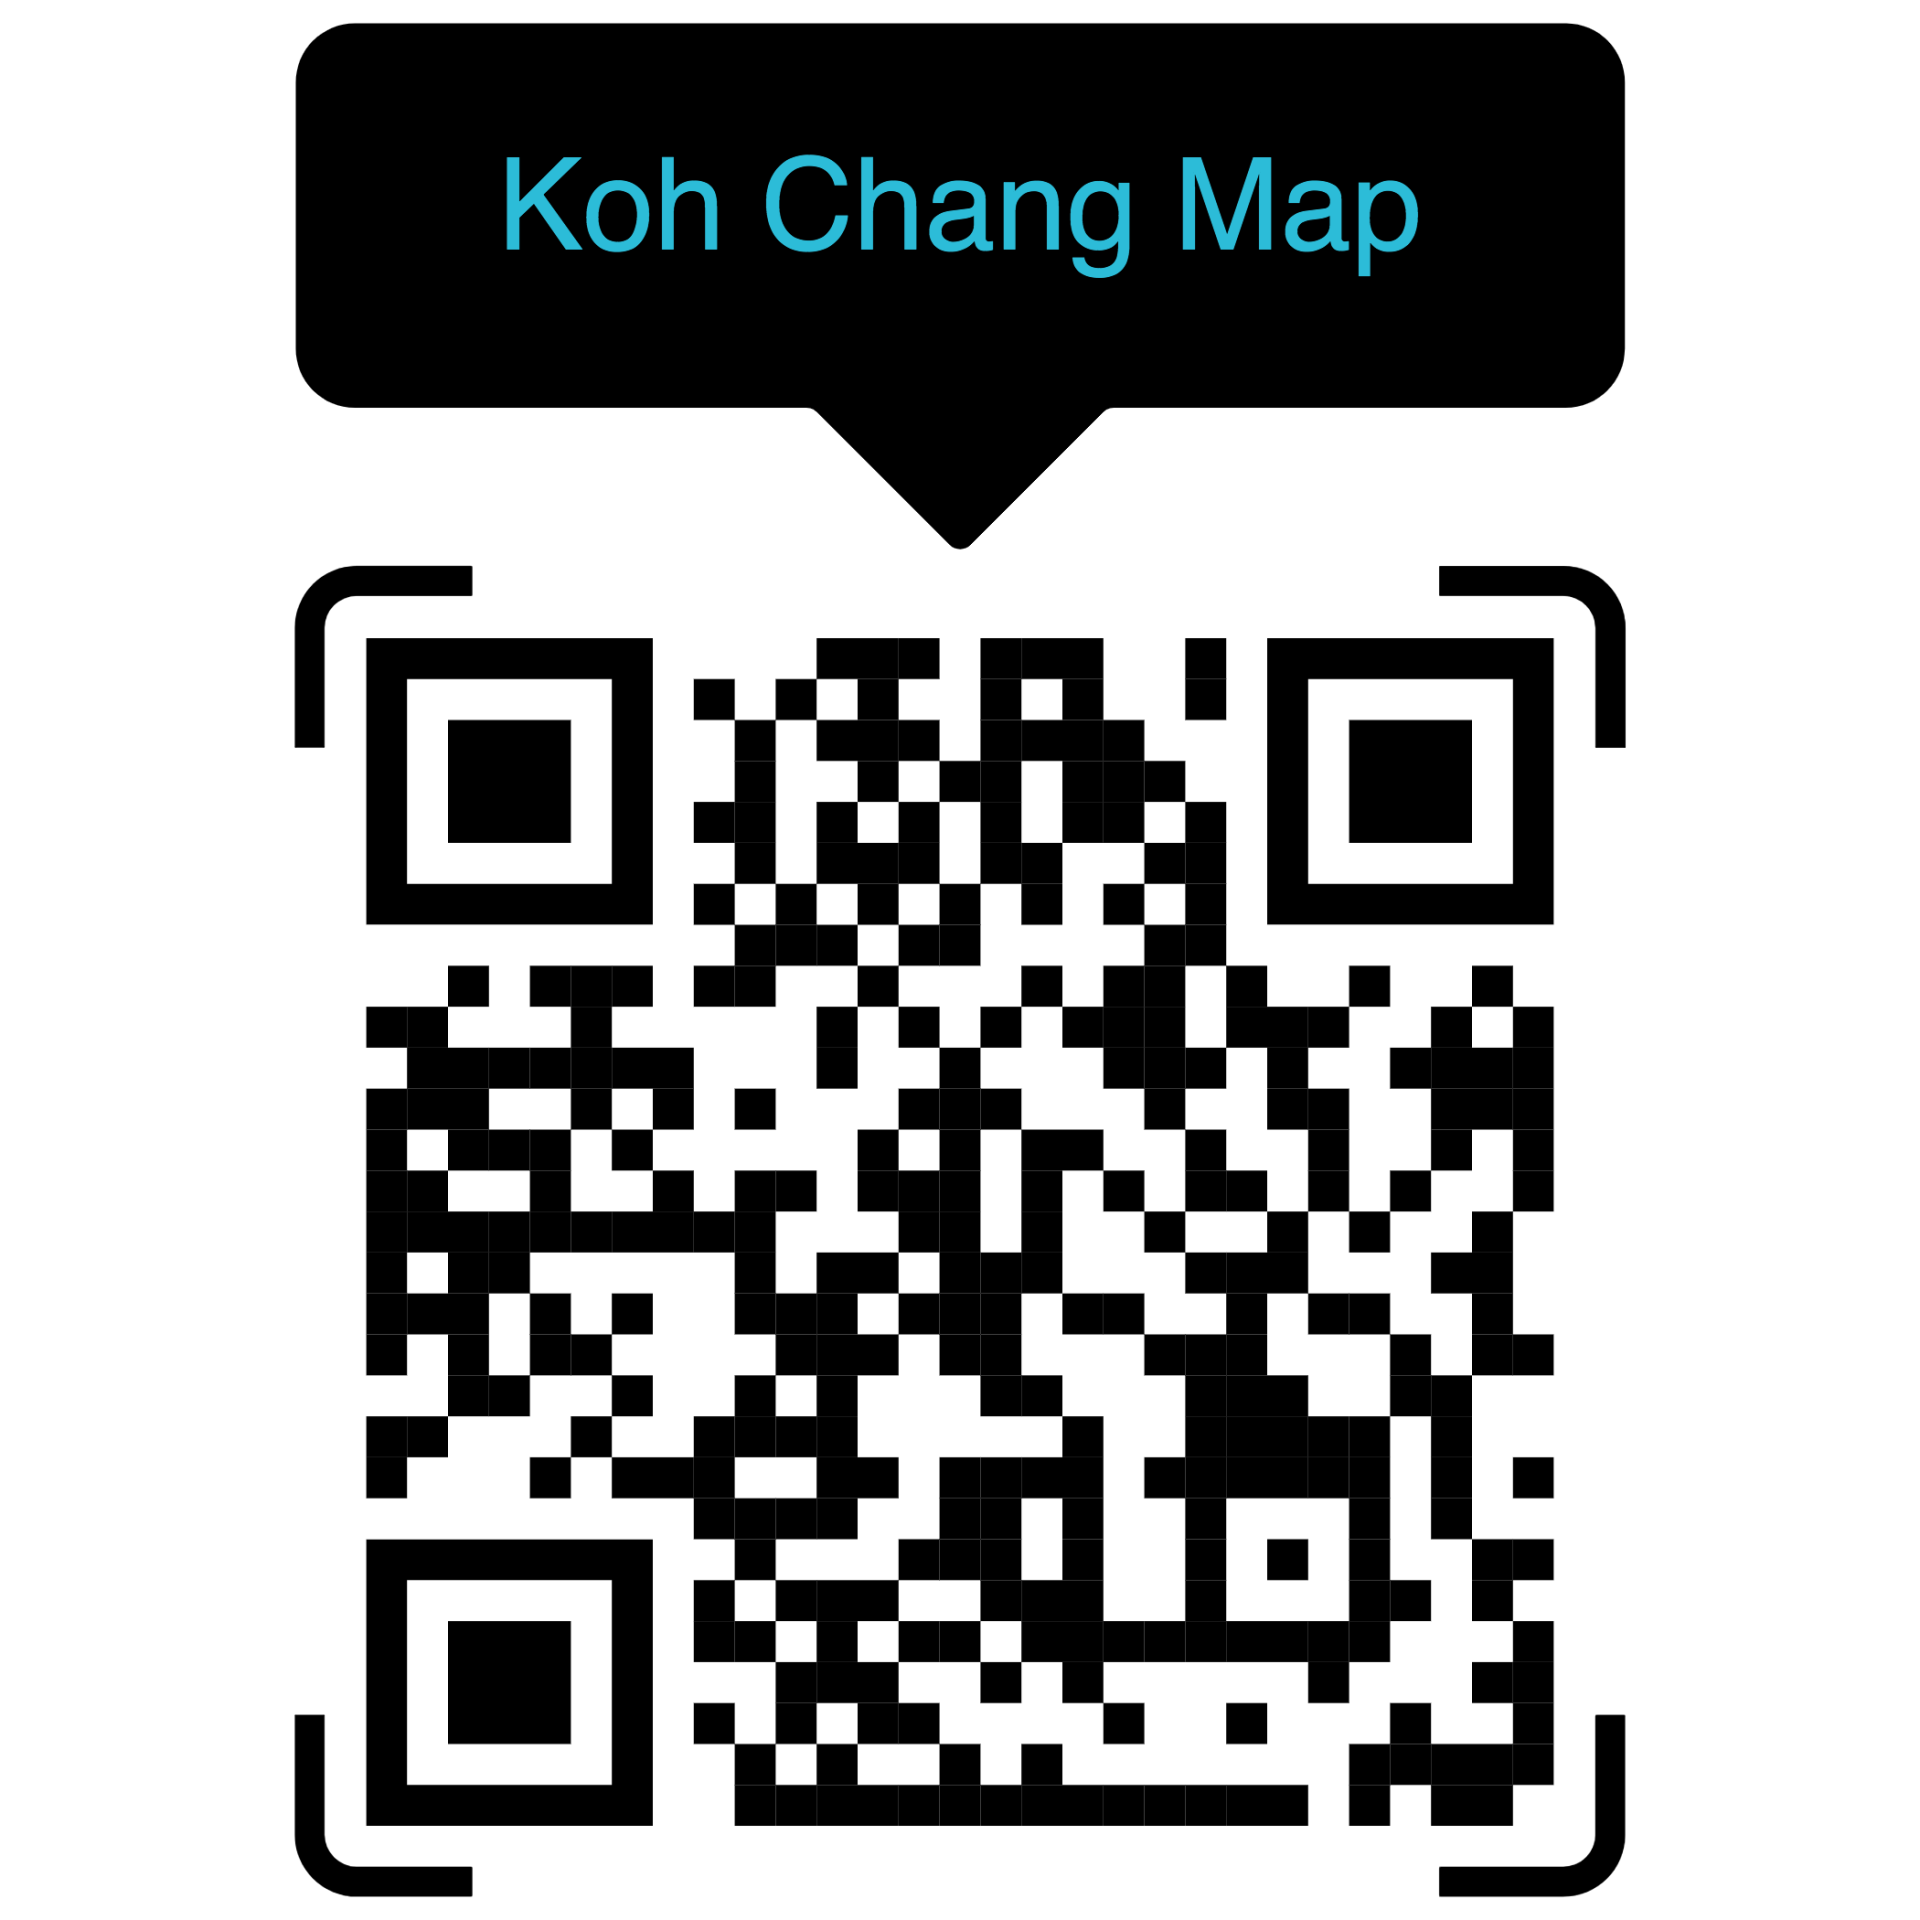 TOC - Koh Chang - Map